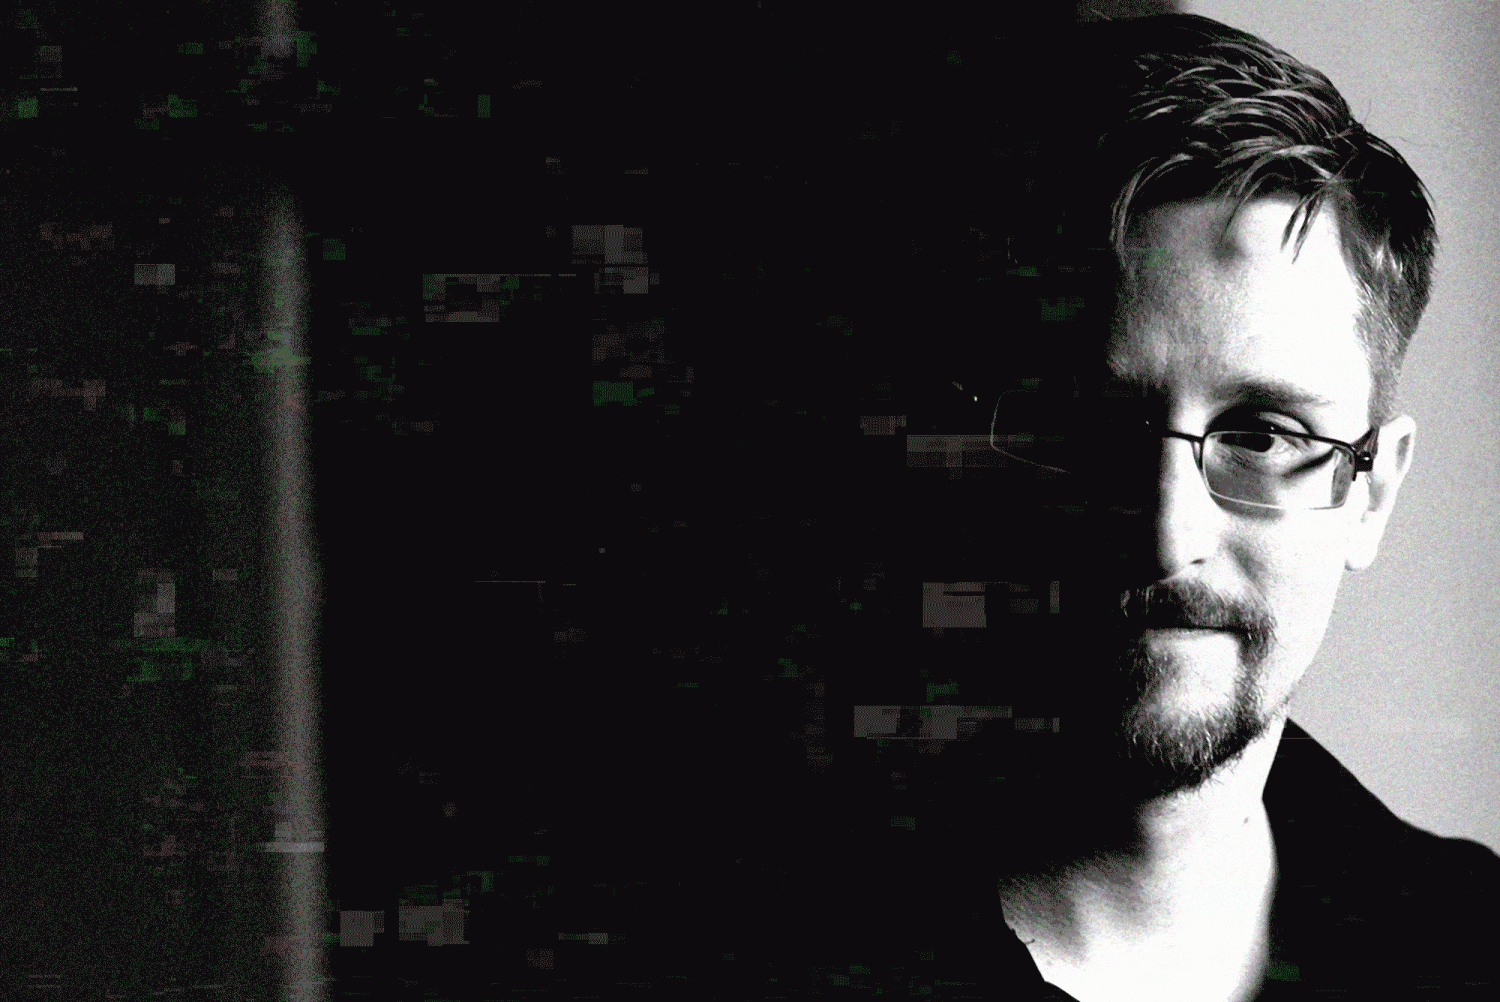 Edward Snowden / The Guardian